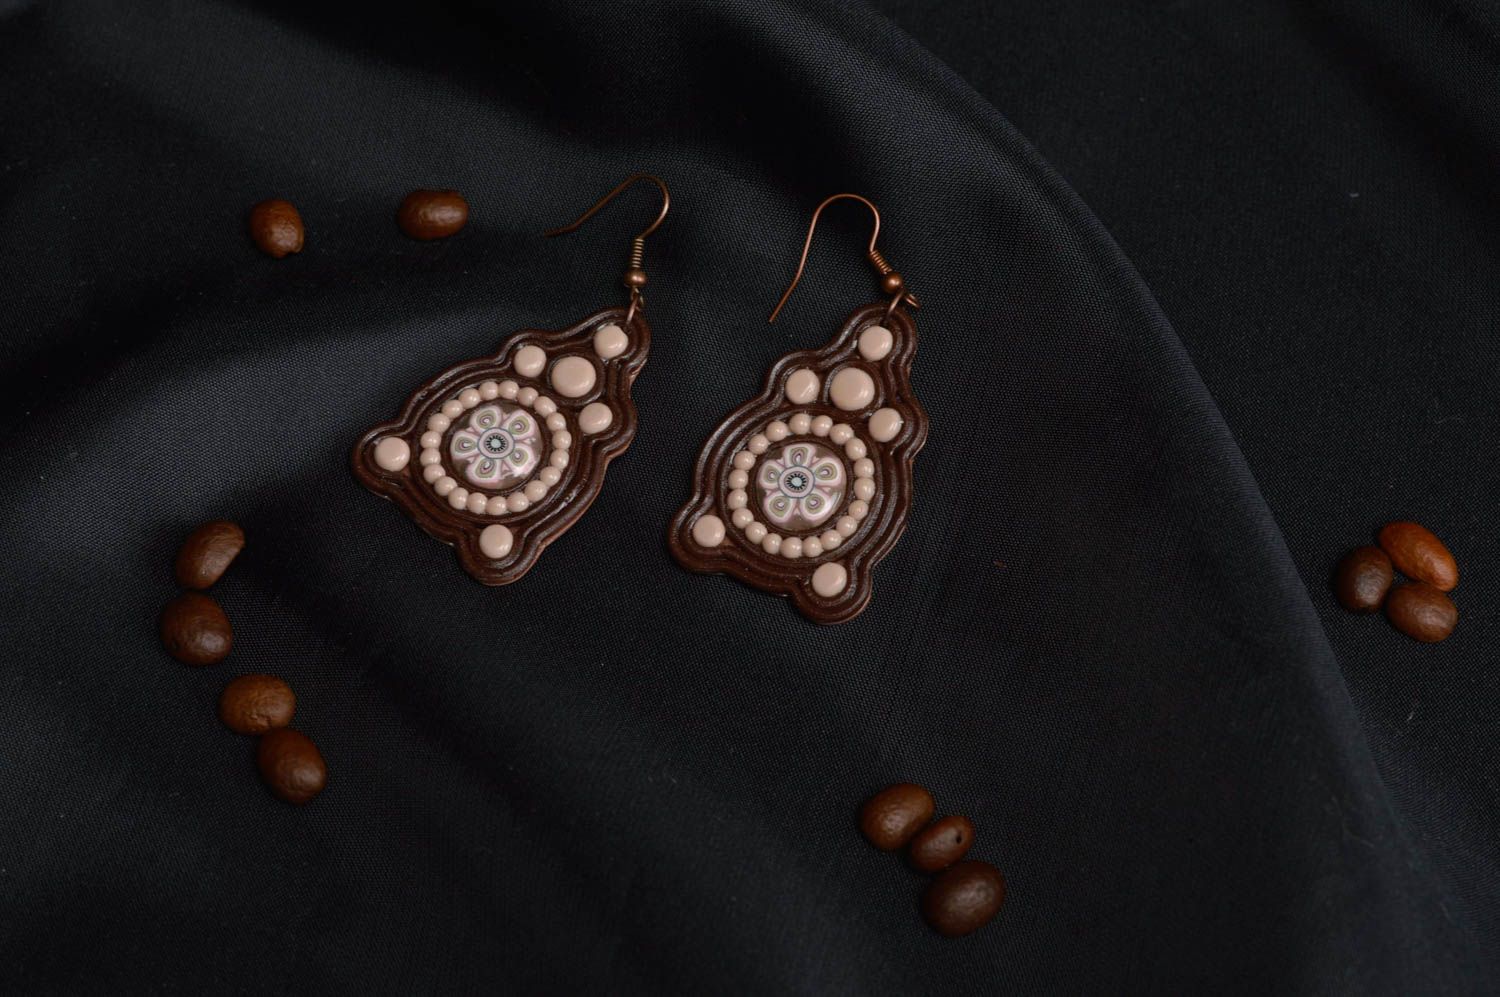 Handmade earrings with charms polymer clay earrings soutache earrings for women photo 1